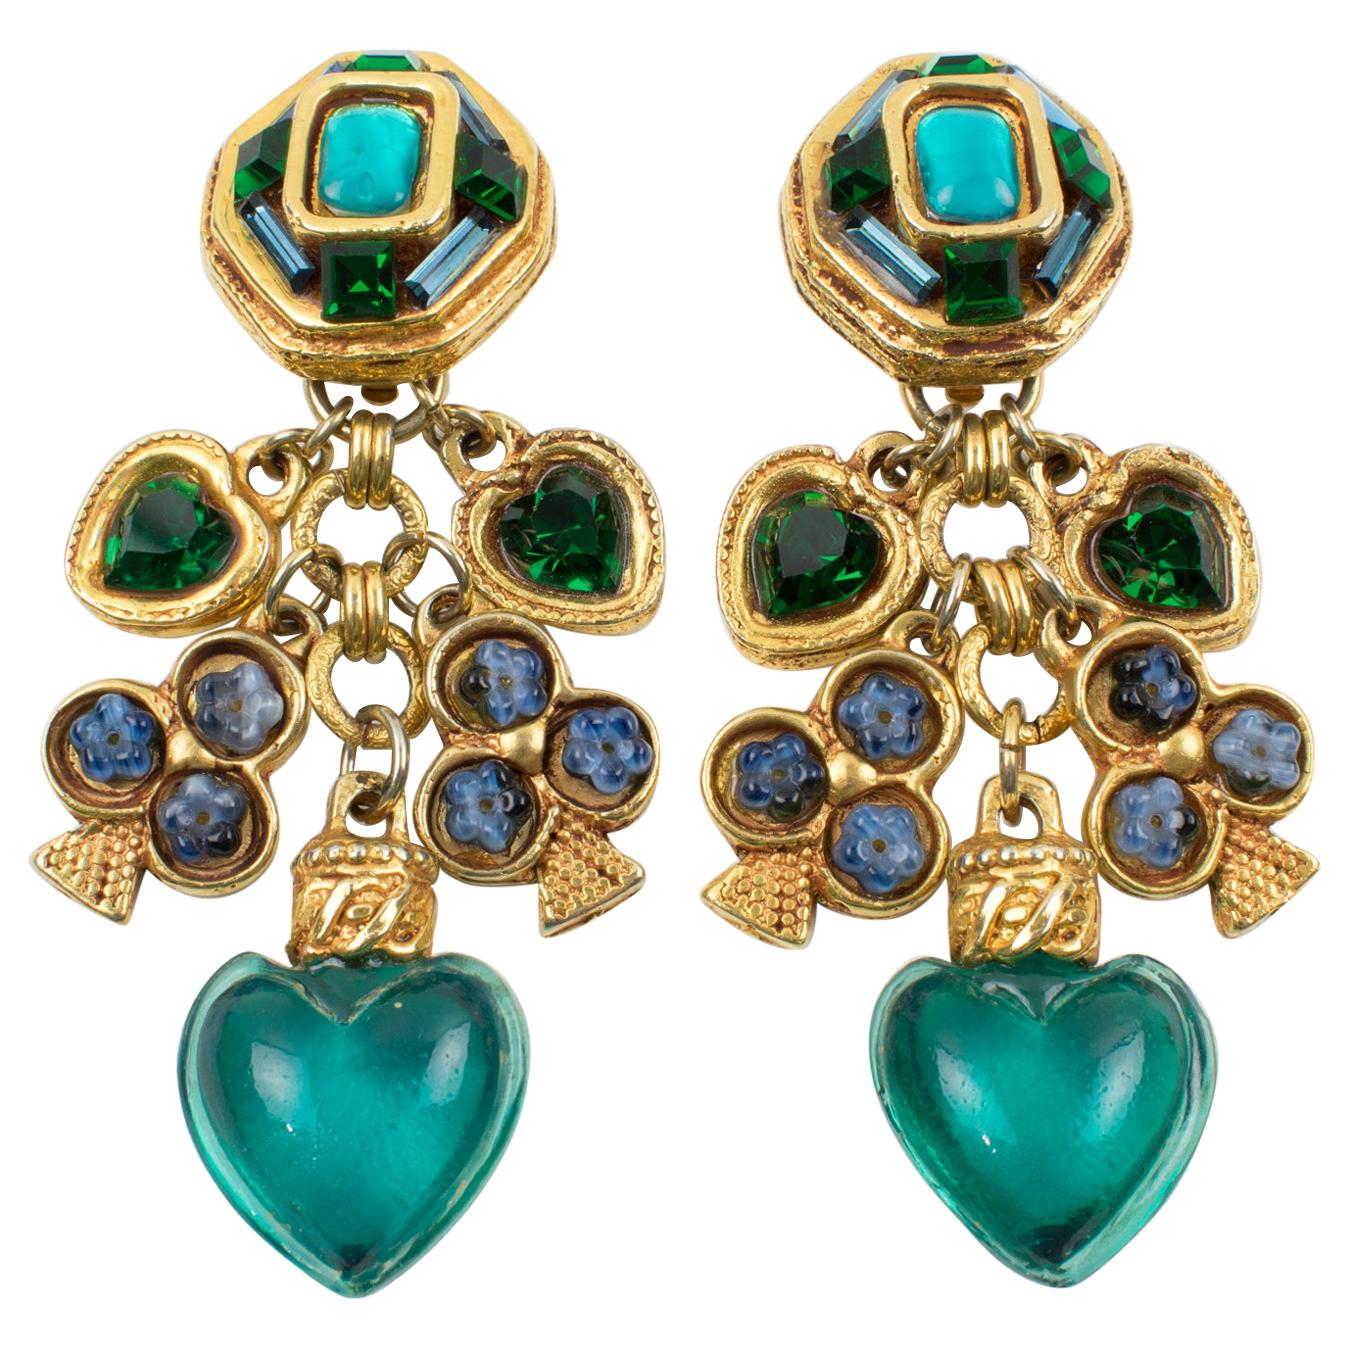 Kalinger Paris Clip Earrings Dangling Green Resin Heart and Club